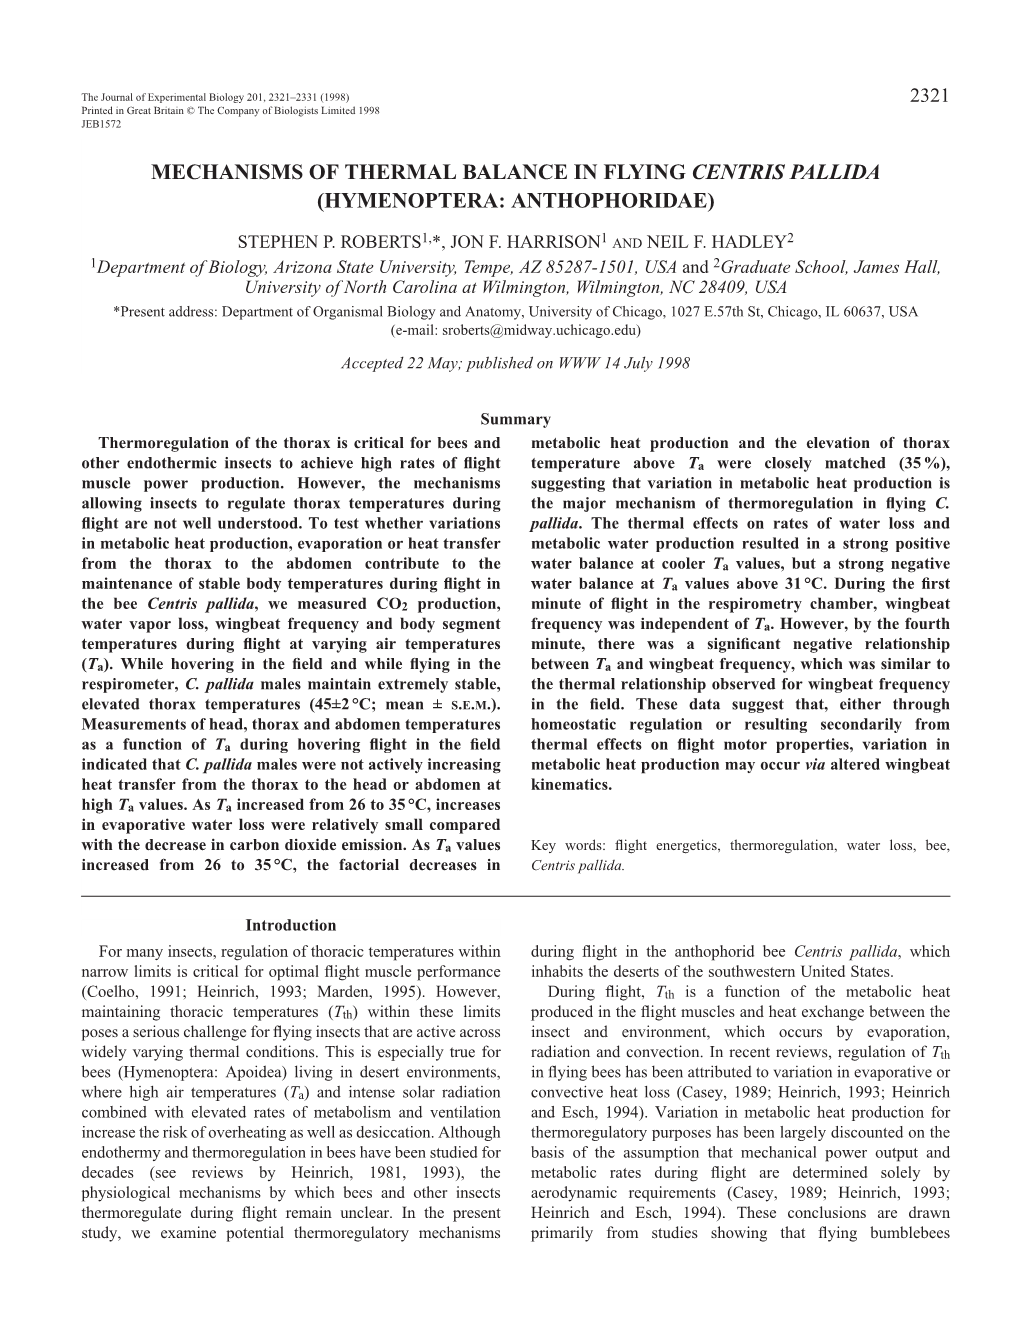 Mechanisms of Thermal Balance in Flying Centris Pallida (Hymenoptera: Anthophoridae)